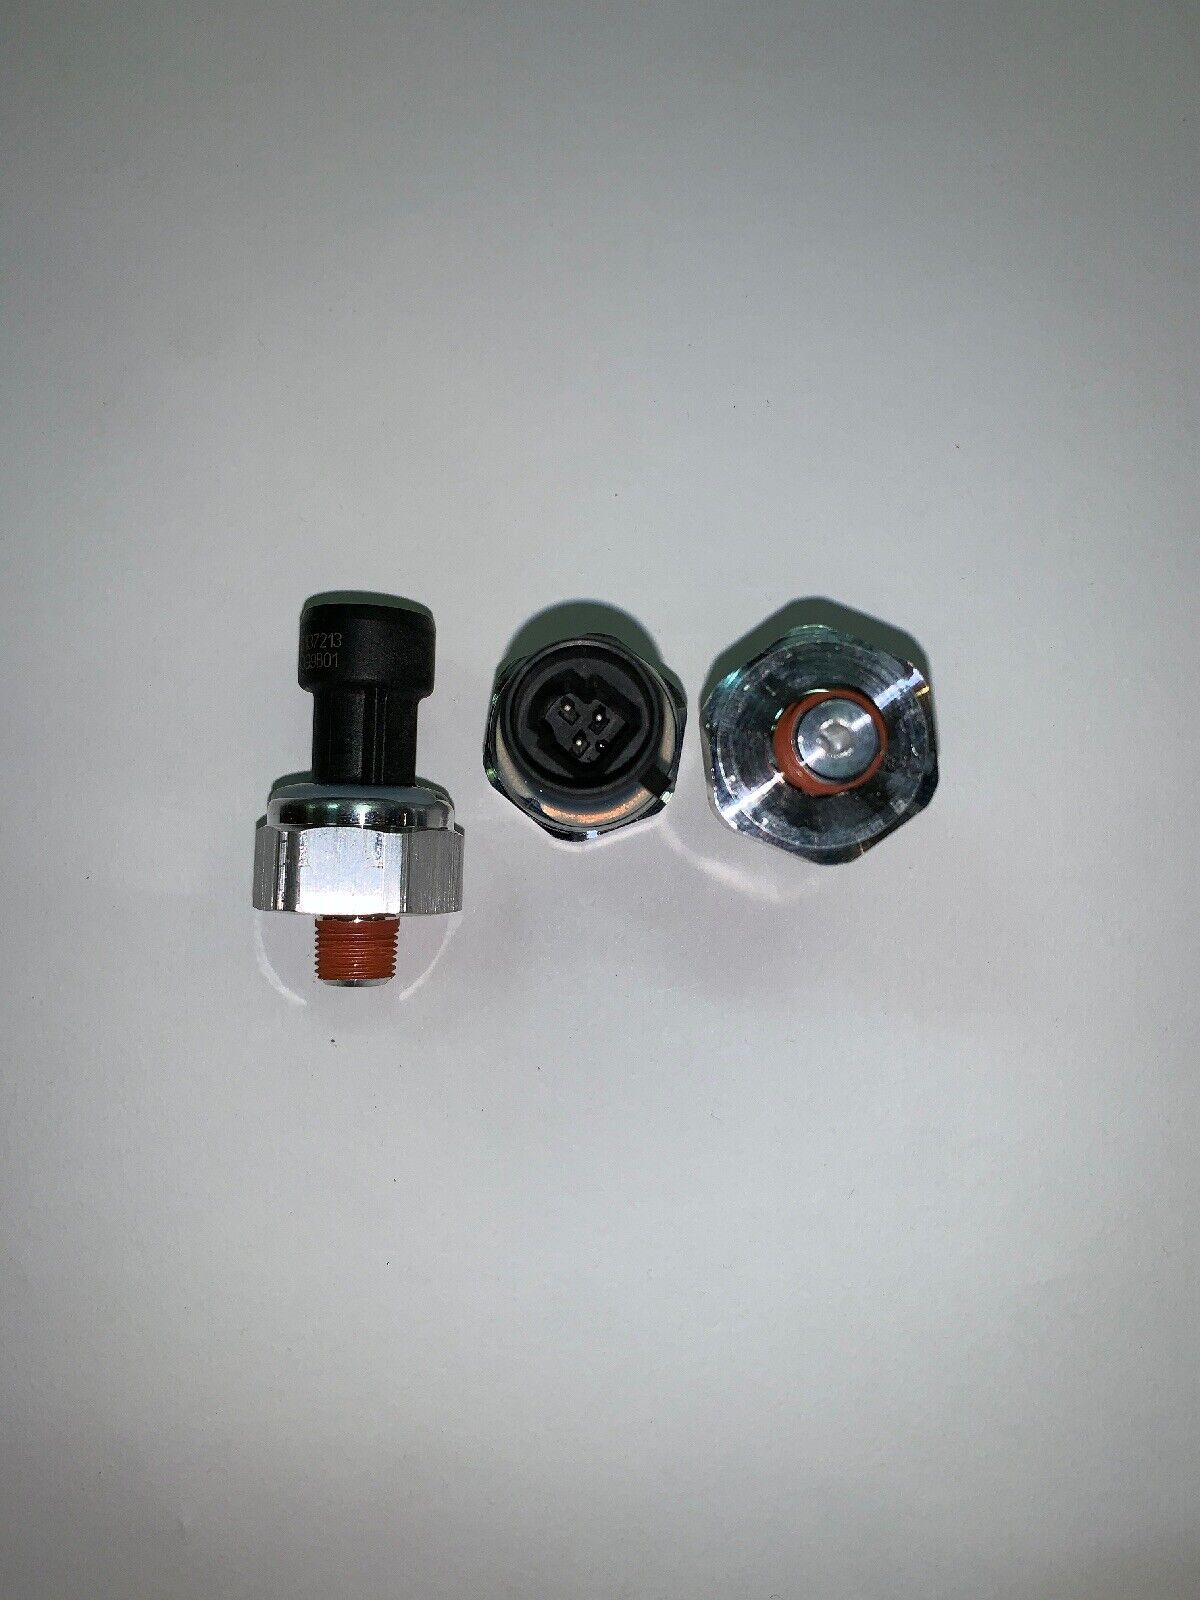 Lot Of 3 Pressure Transducer Sensor Sensata Technologies 40137213 New